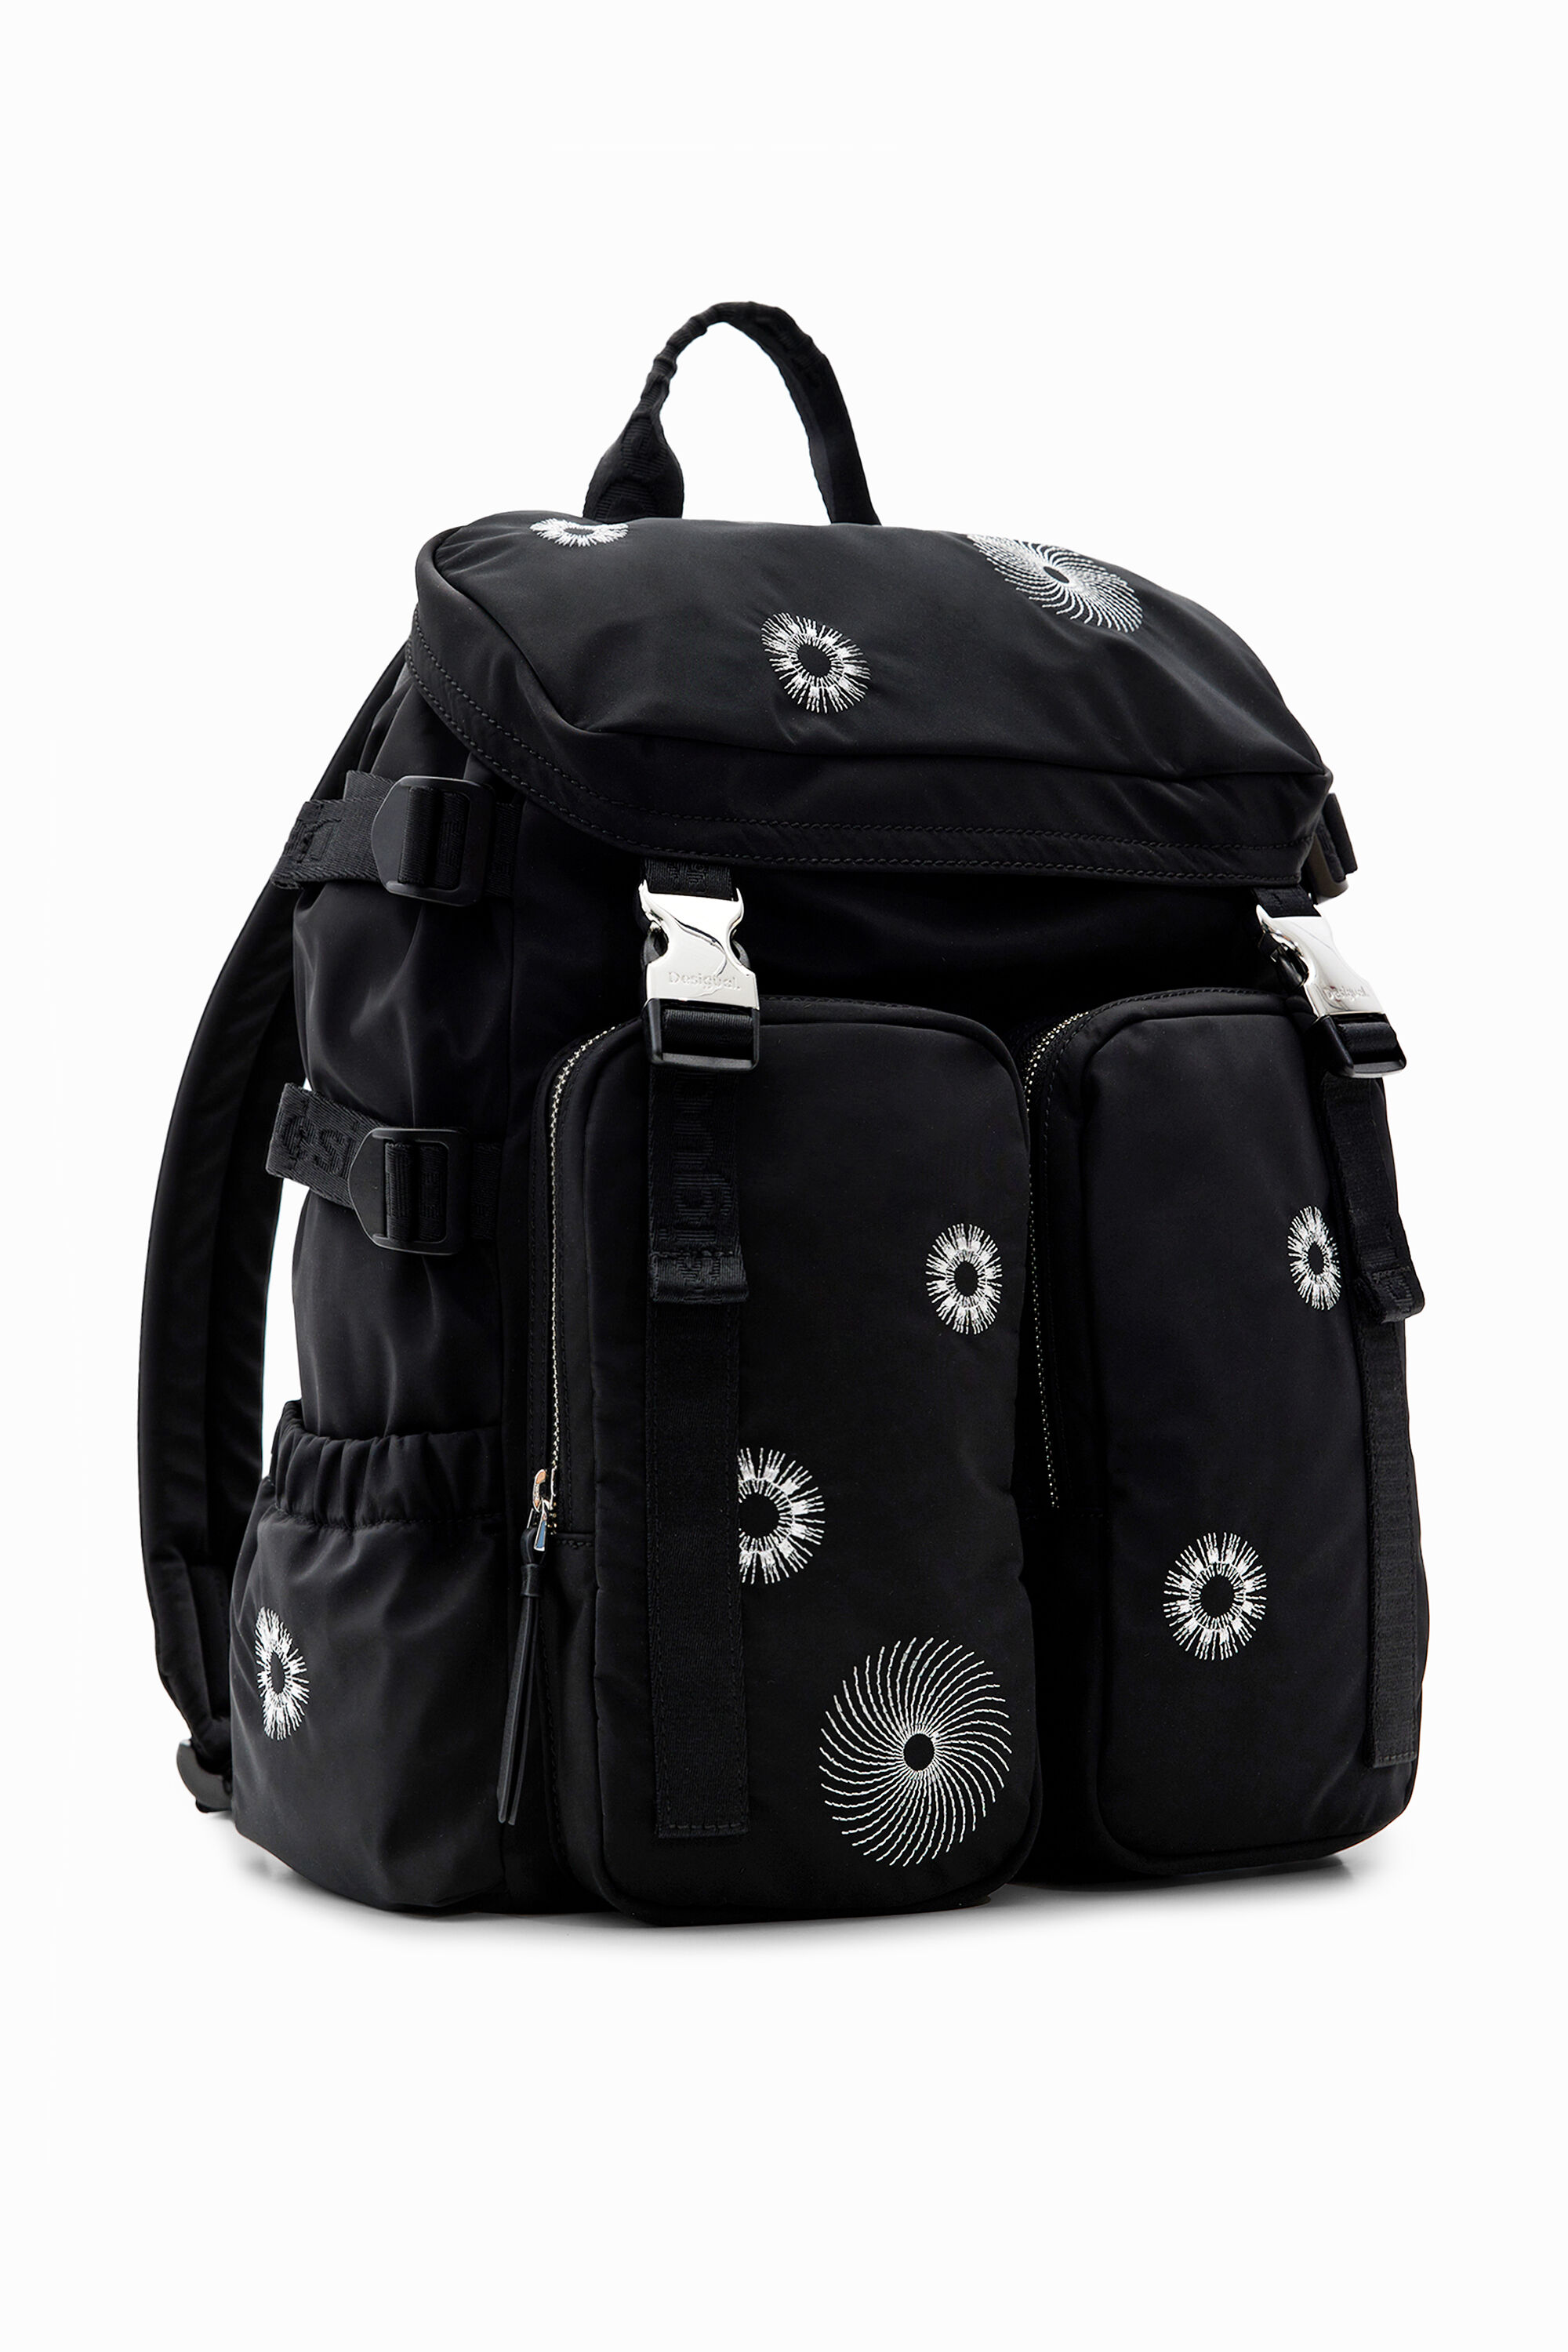 Desigual Large embroidered backpack